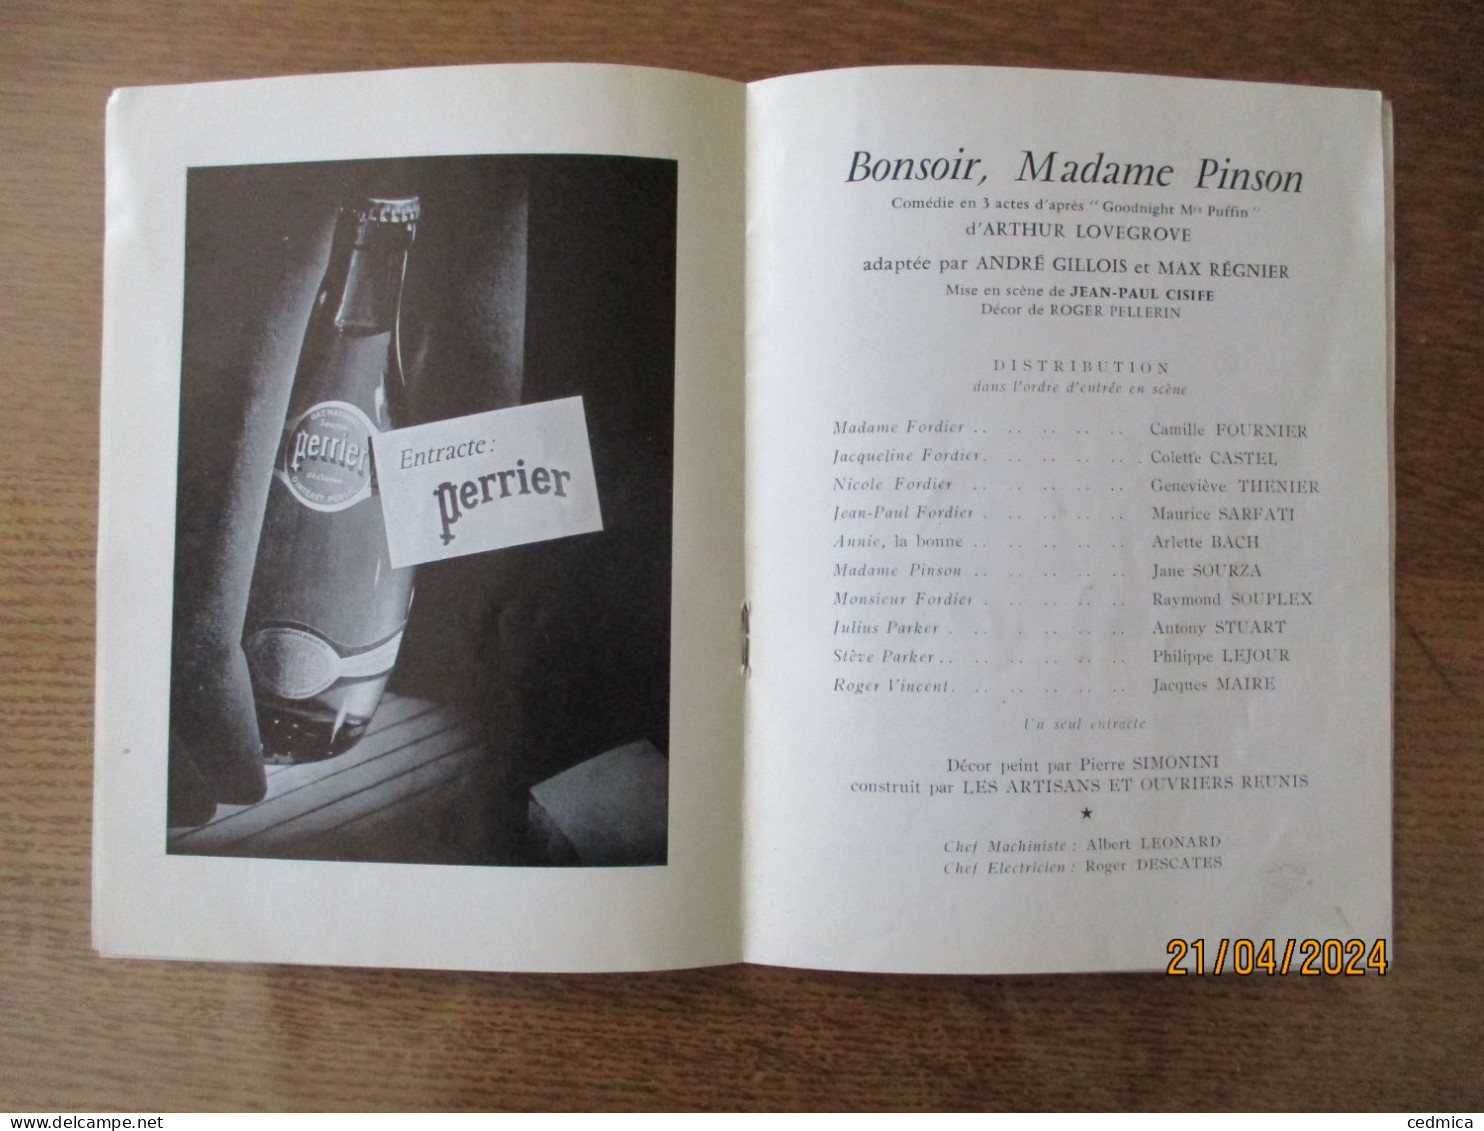 THEATRE DE LA PORTE St MARTIN SAISON 1963-1964 BONSOIR,MADAME PINSON - Programma's